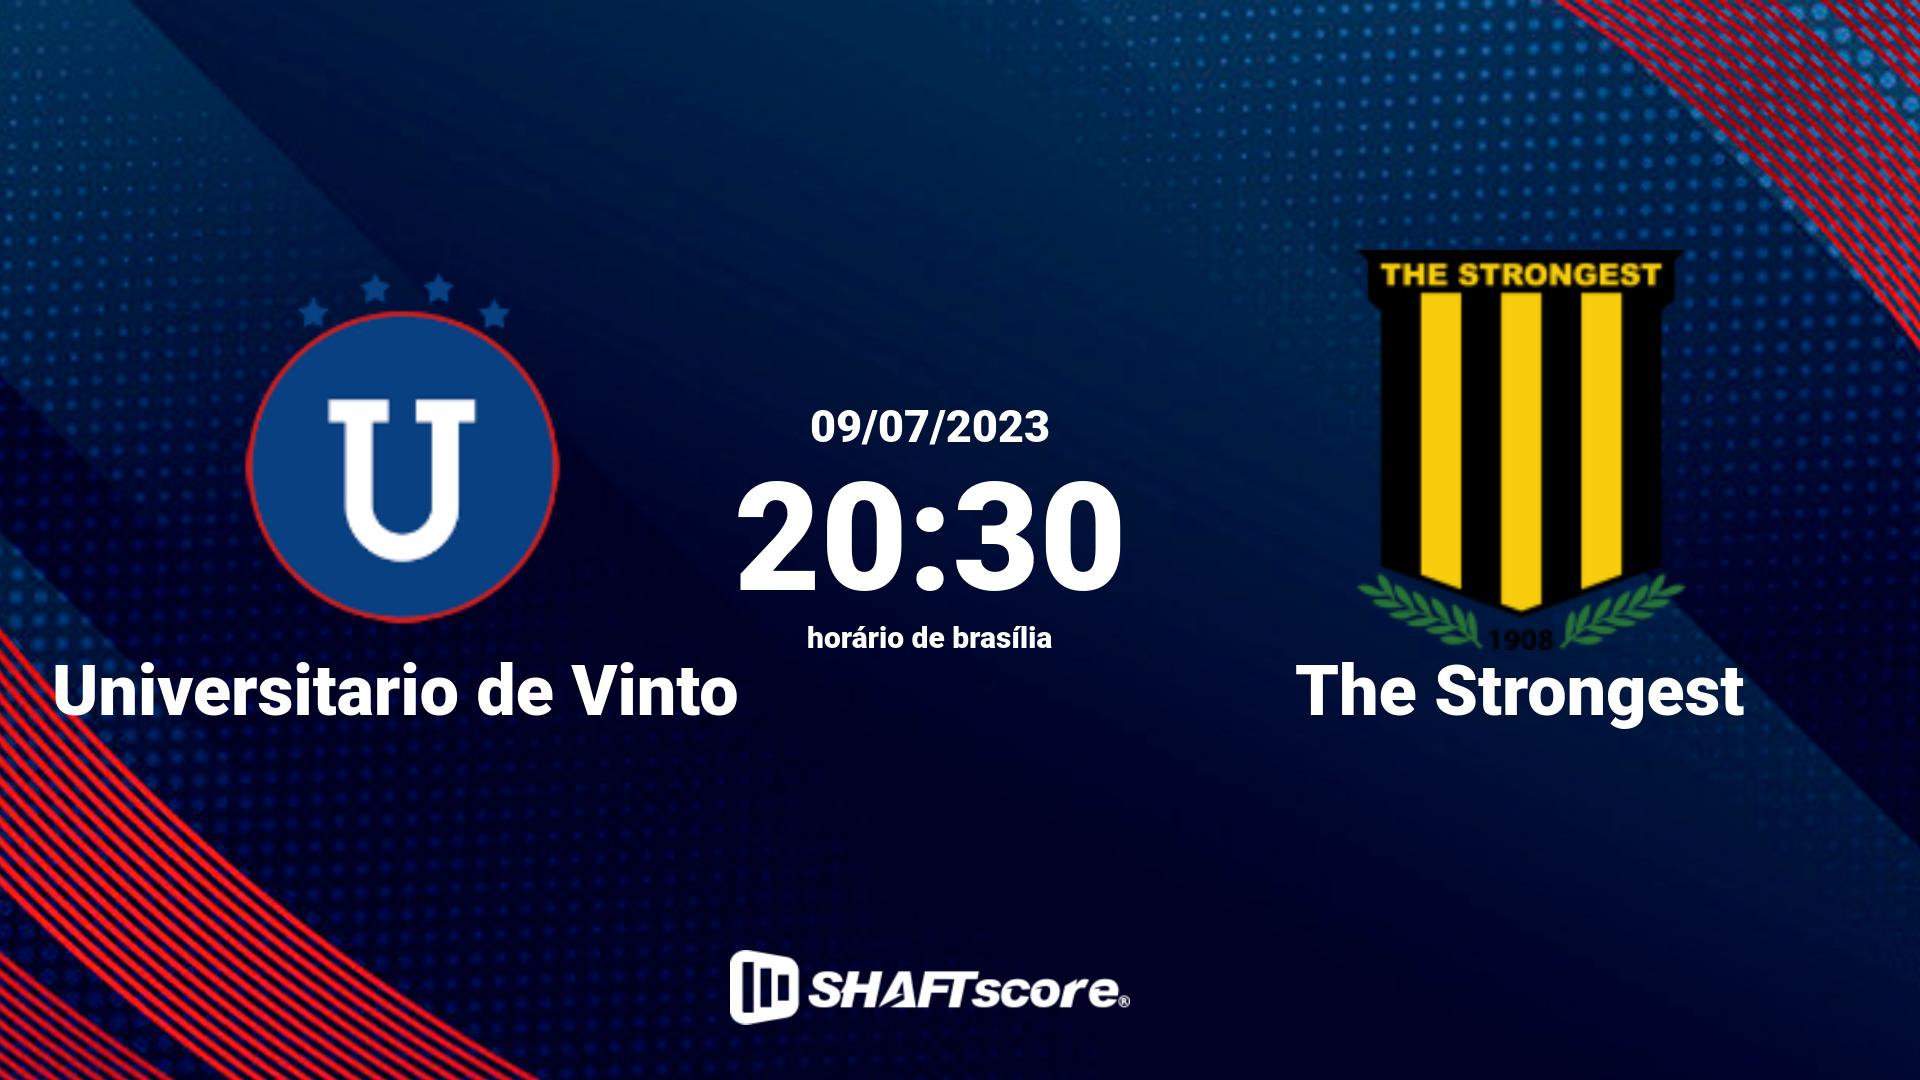 Estatísticas do jogo Universitario de Vinto vs The Strongest 09.07 20:30